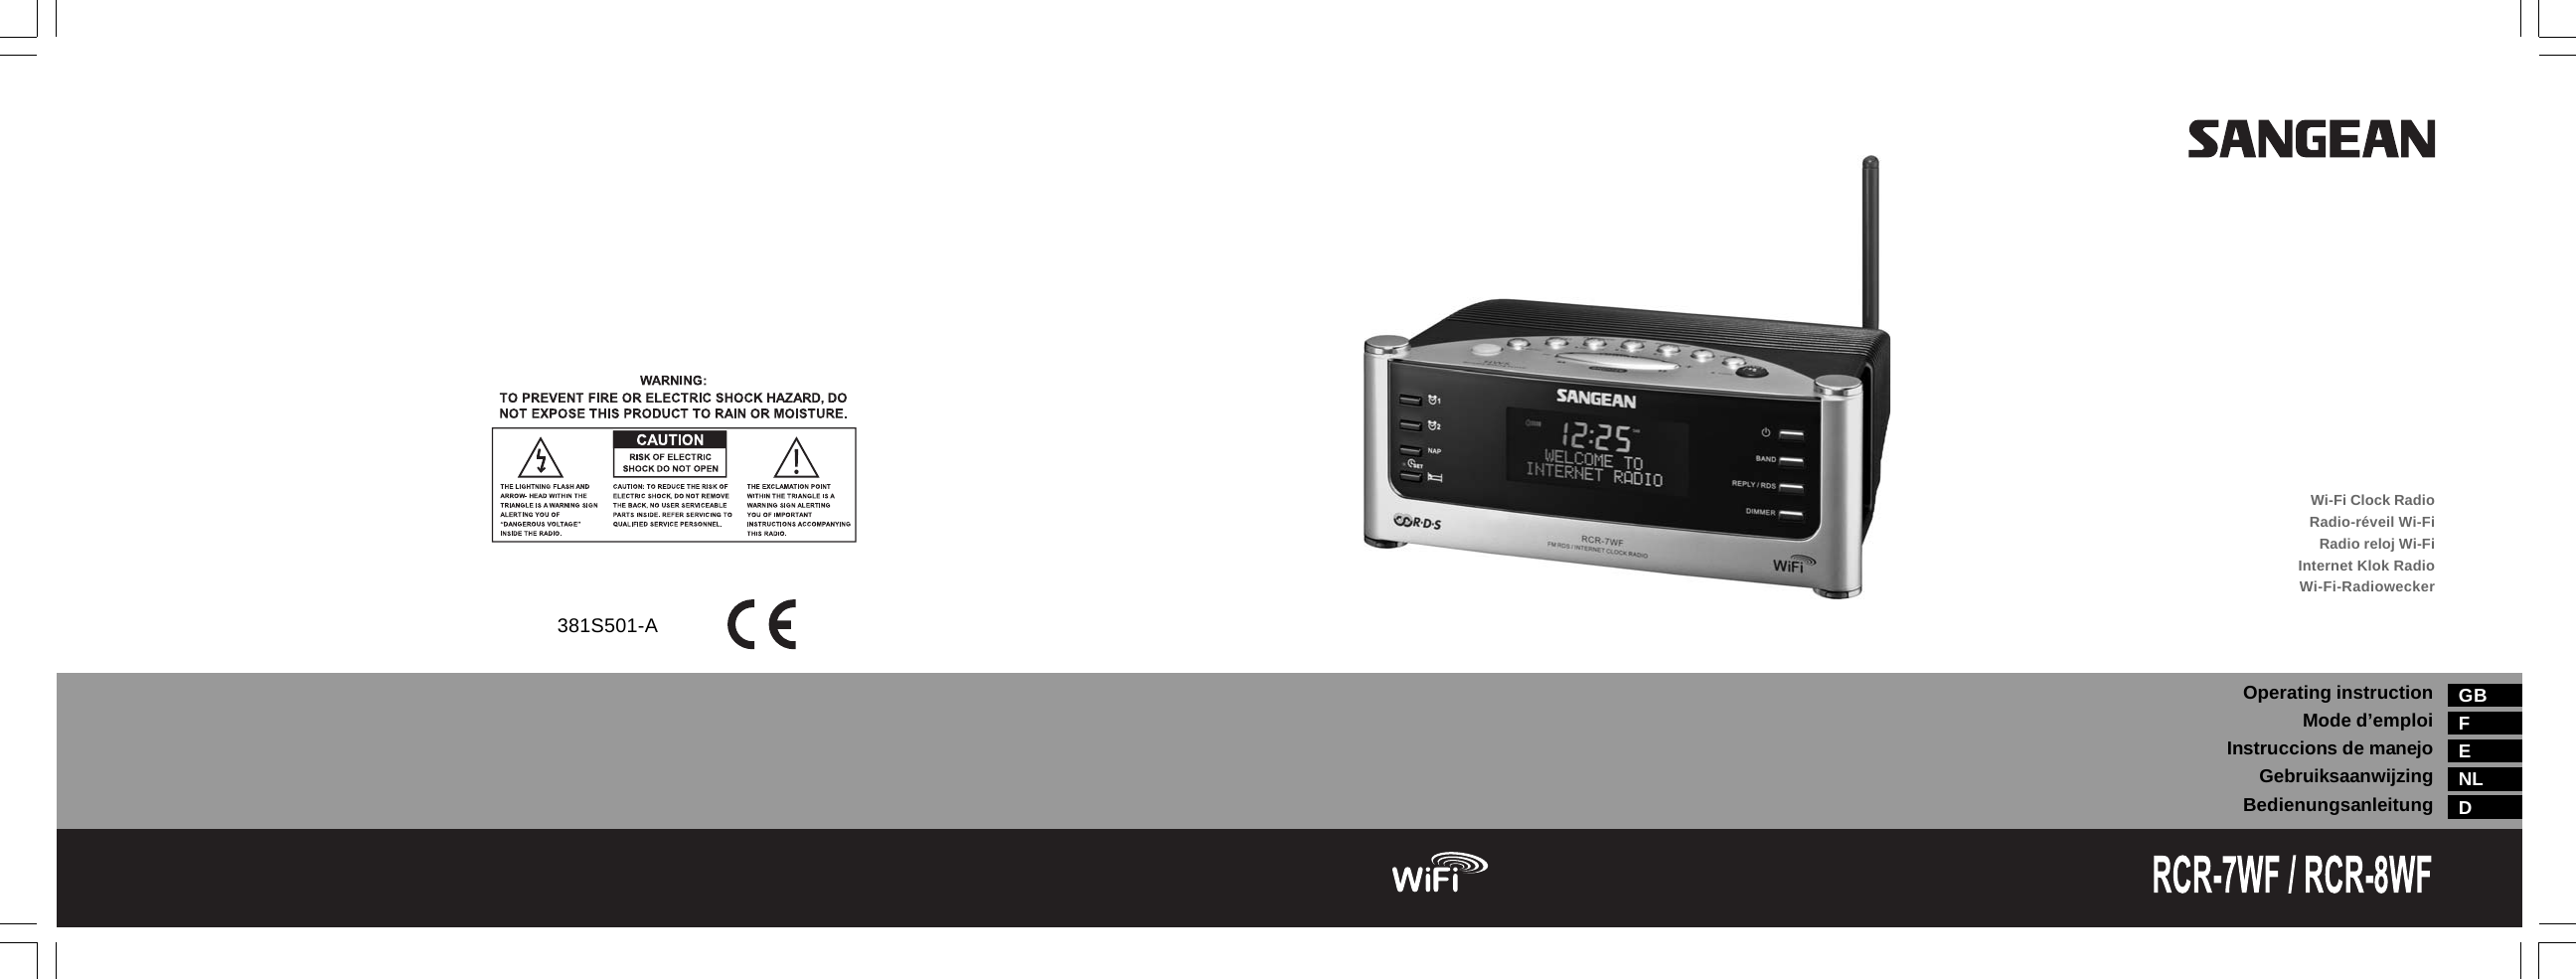 Operating instructionMode d’emploiInstruccions de manejoGebruiksaanwijzingBedienungsanleitung381S501-AGBFENLDWi-Fi Clock RadioRadio-réveil Wi-FiRadio reloj Wi-FiInternet Klok RadioWi-Fi-Radiowecker